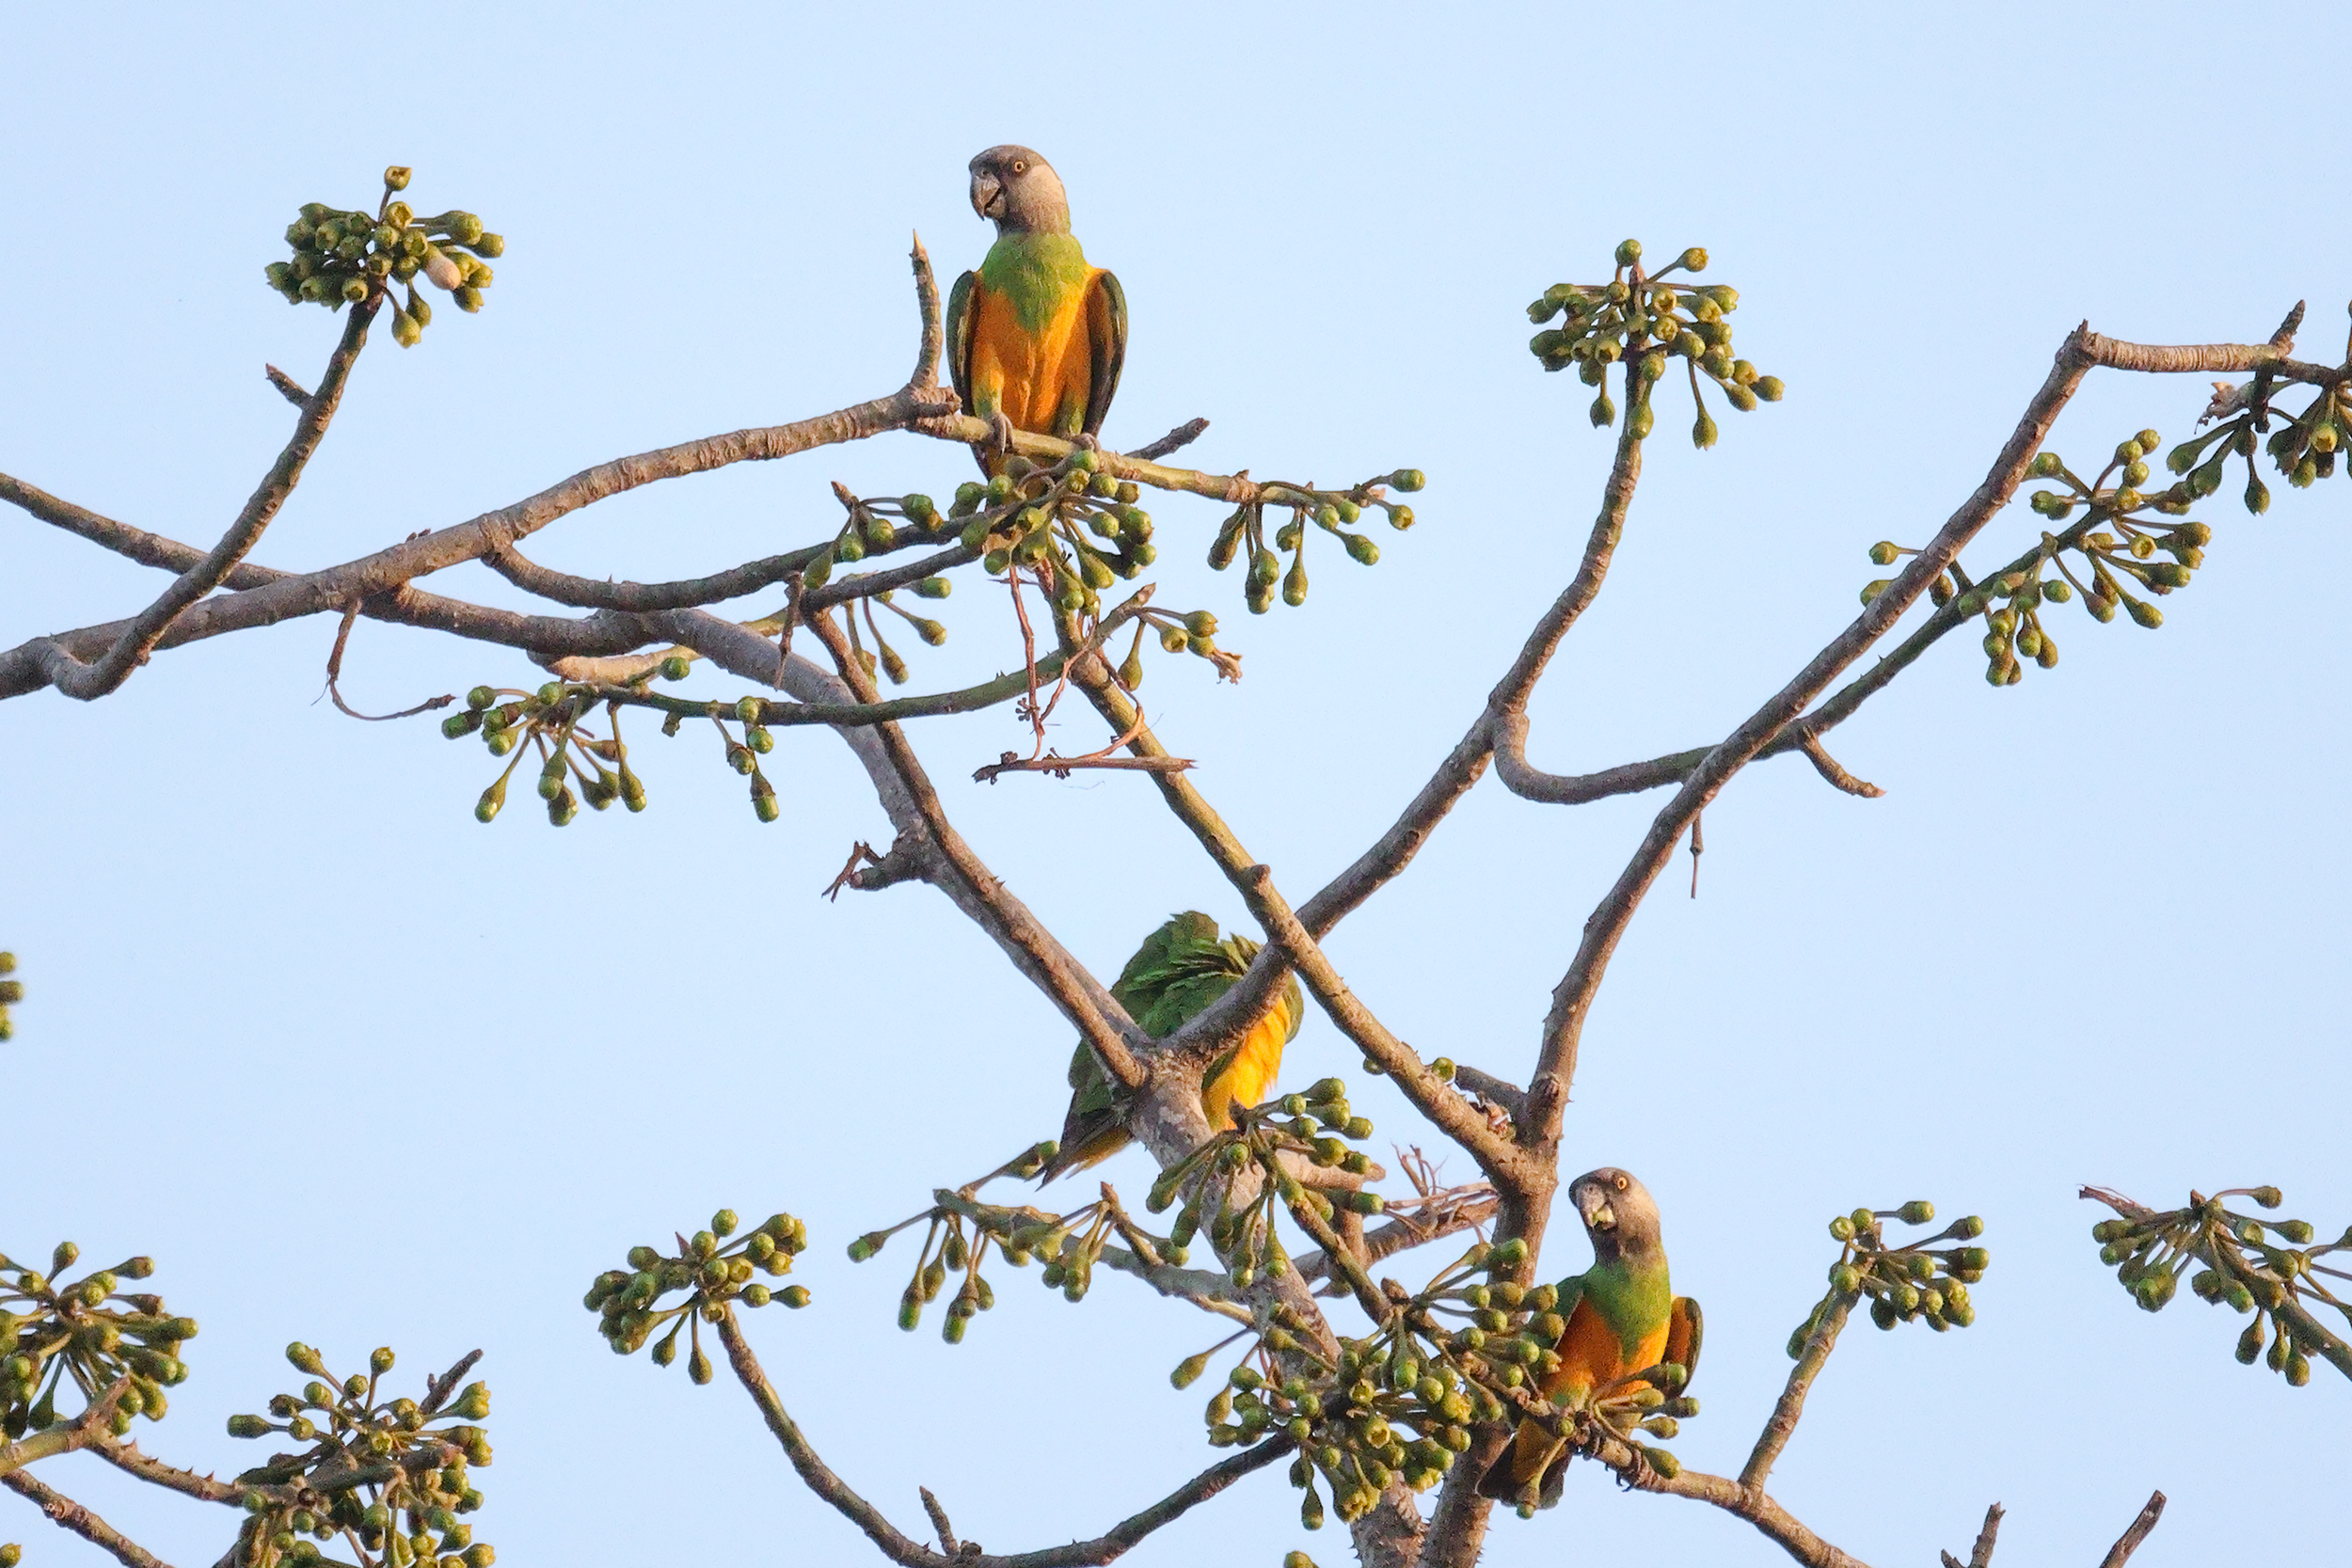 Senegal Parrot, Saloum Delta, Senegal.